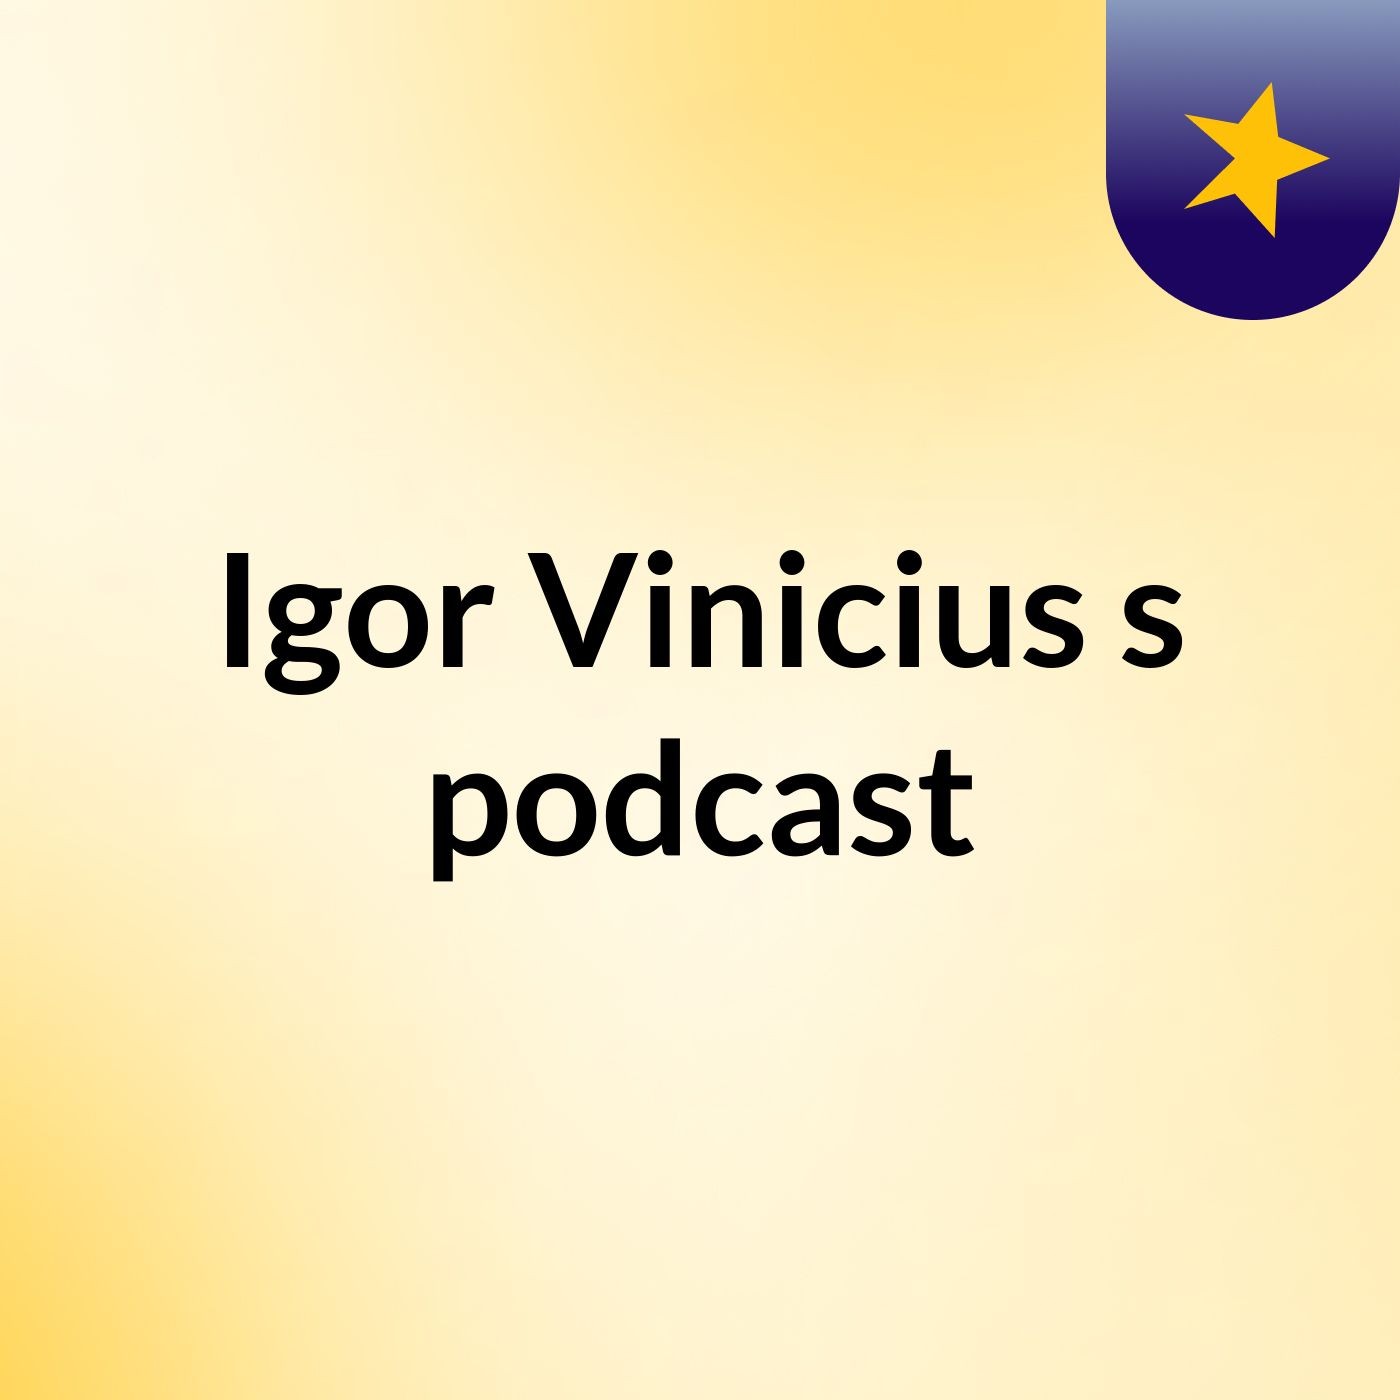 Igor Vinicius's podcast